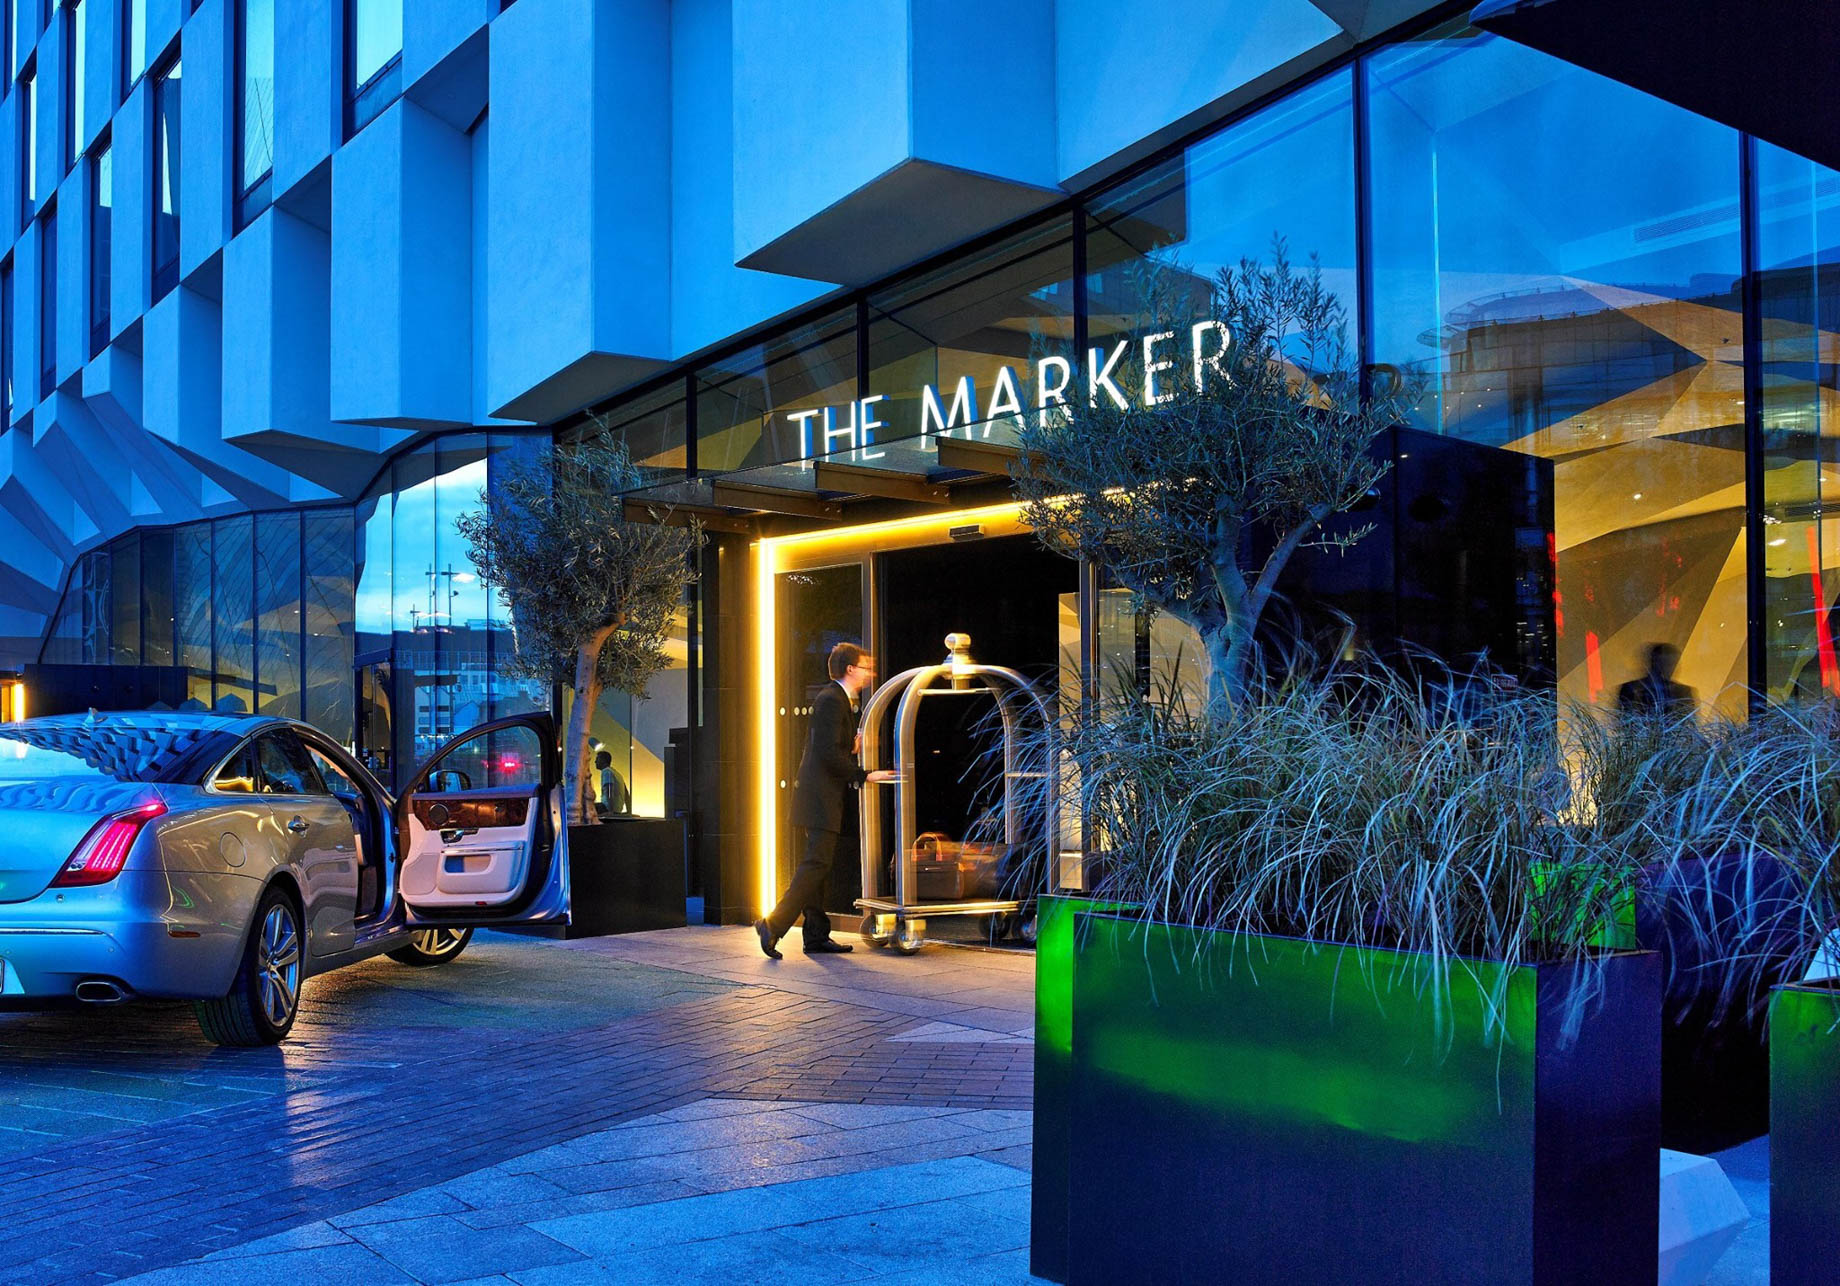 Anantara The Marker Dublin Hotel – Dublin, Ireland – Exterior Entrance